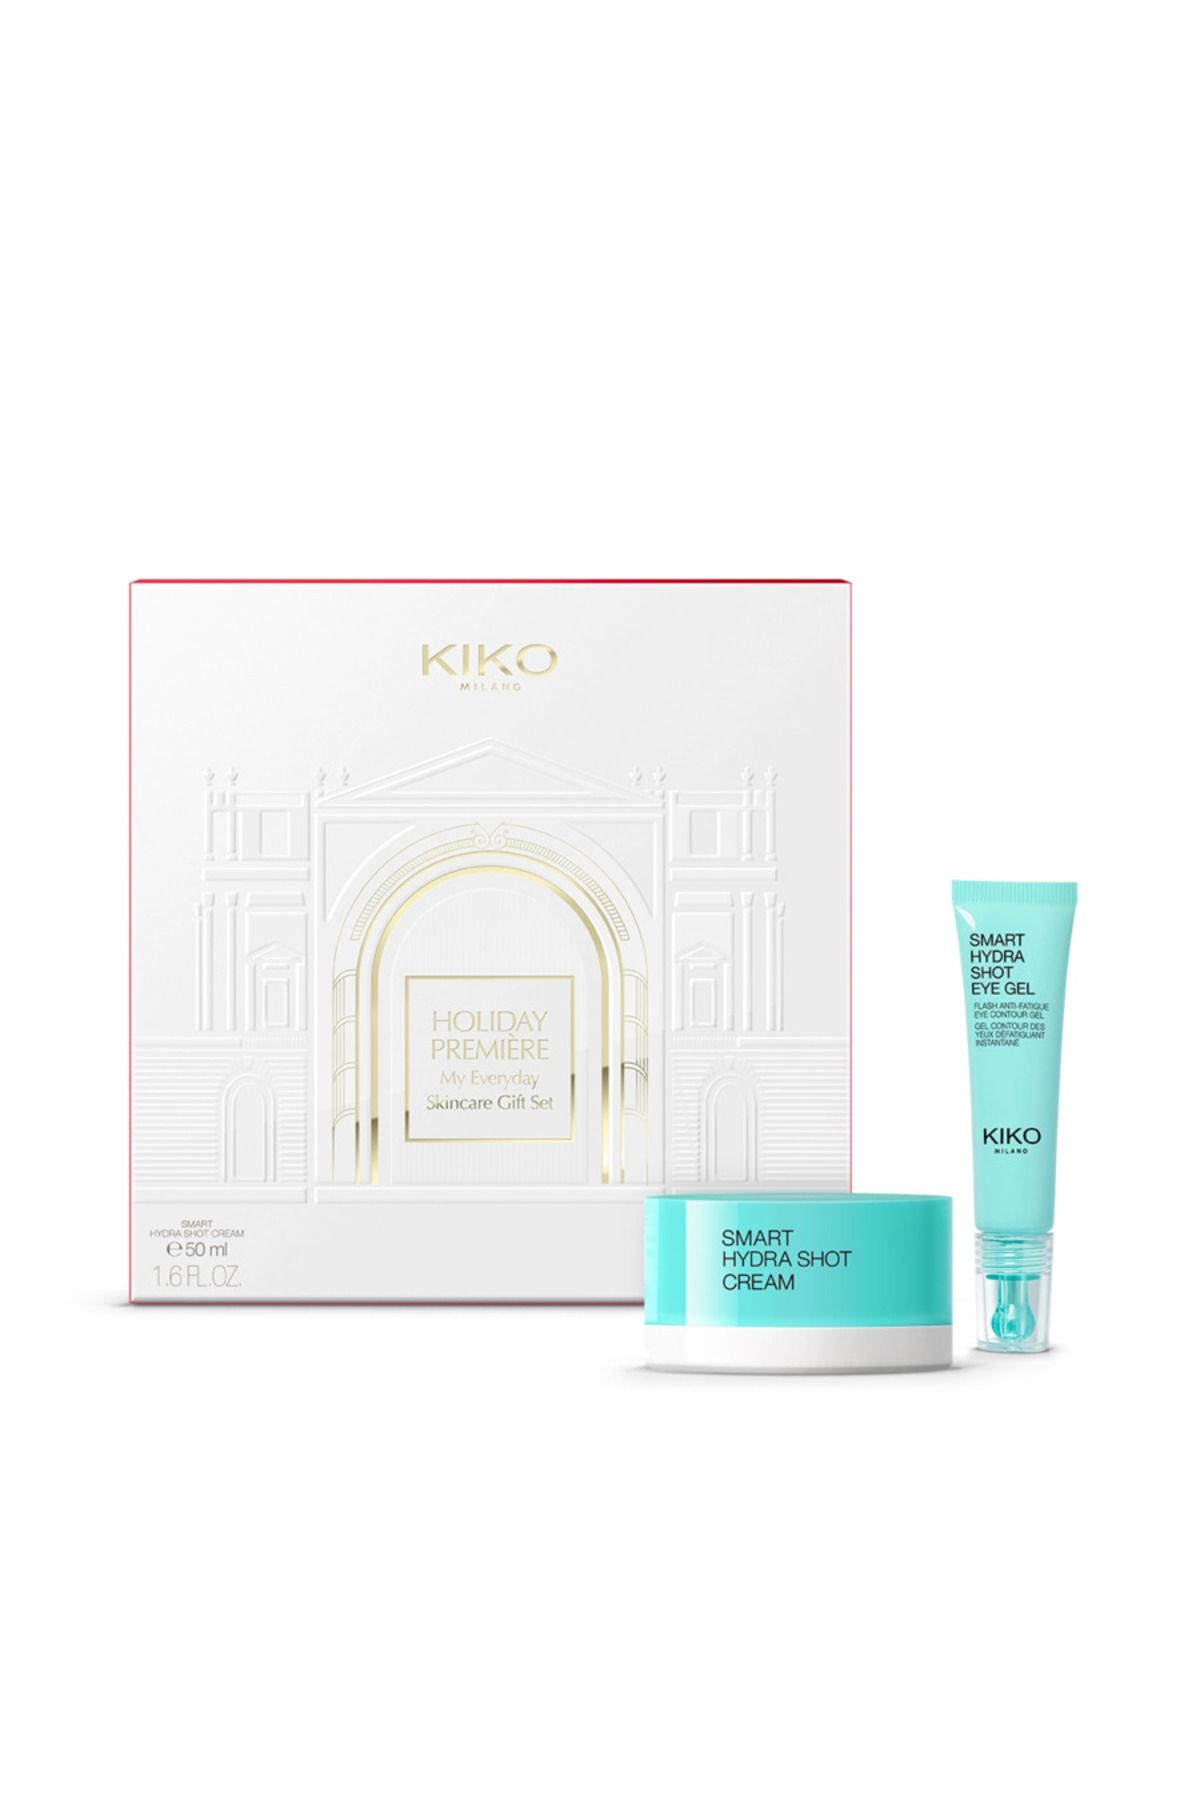 KIKO مجموعه آرایشی مجموعه هدیه مراقبت از پوست مناسب برای تعطیلات